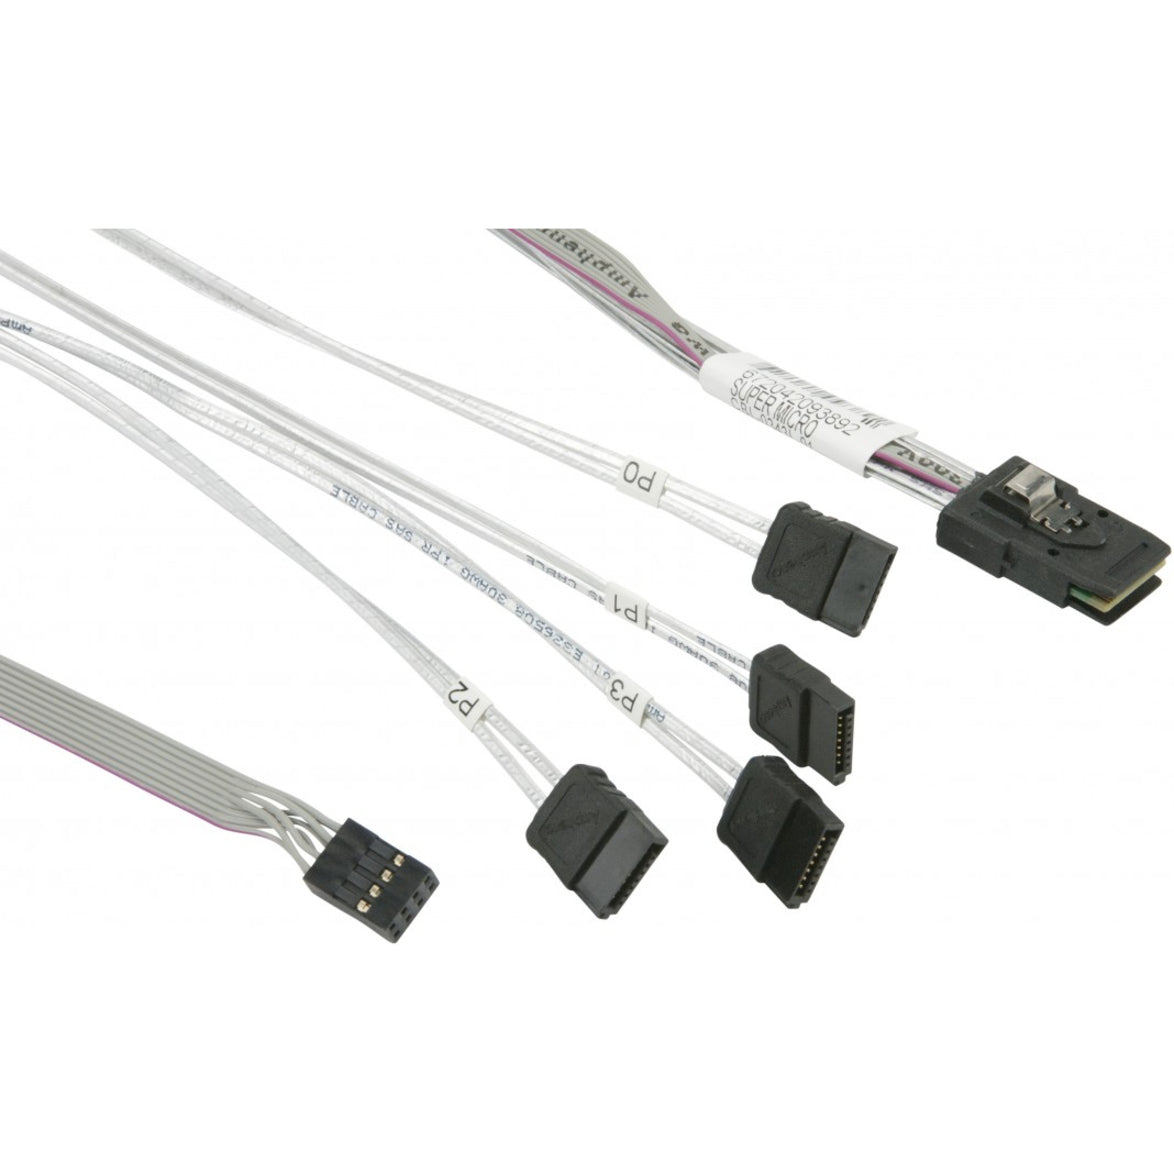 Supermicro SAS/SATA Data Transfer Cable